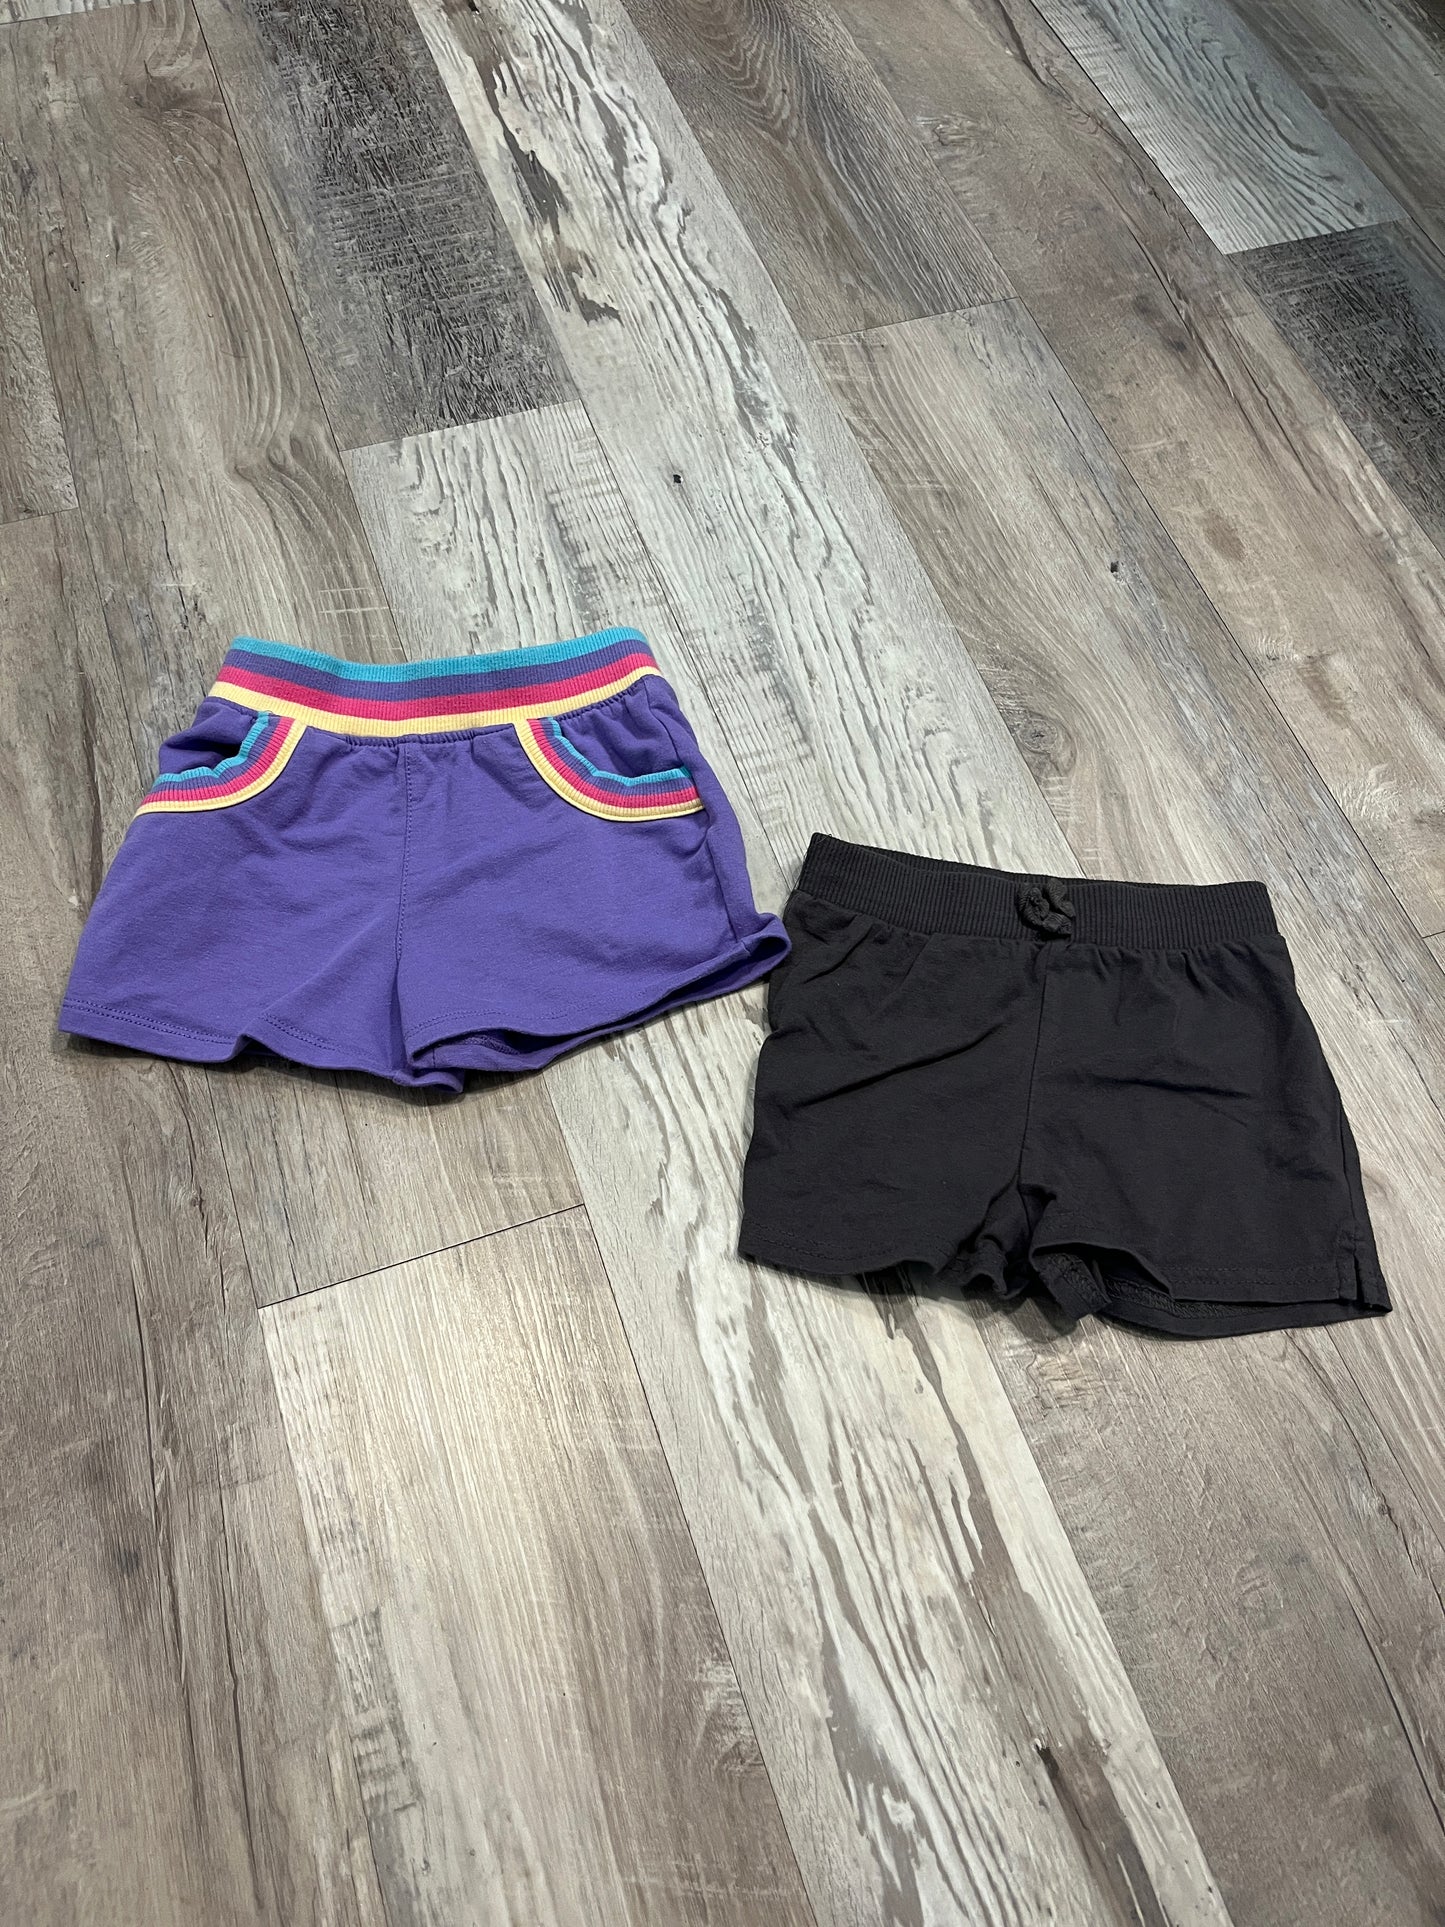 Girls Wonderkids Shorts Set Size 5T